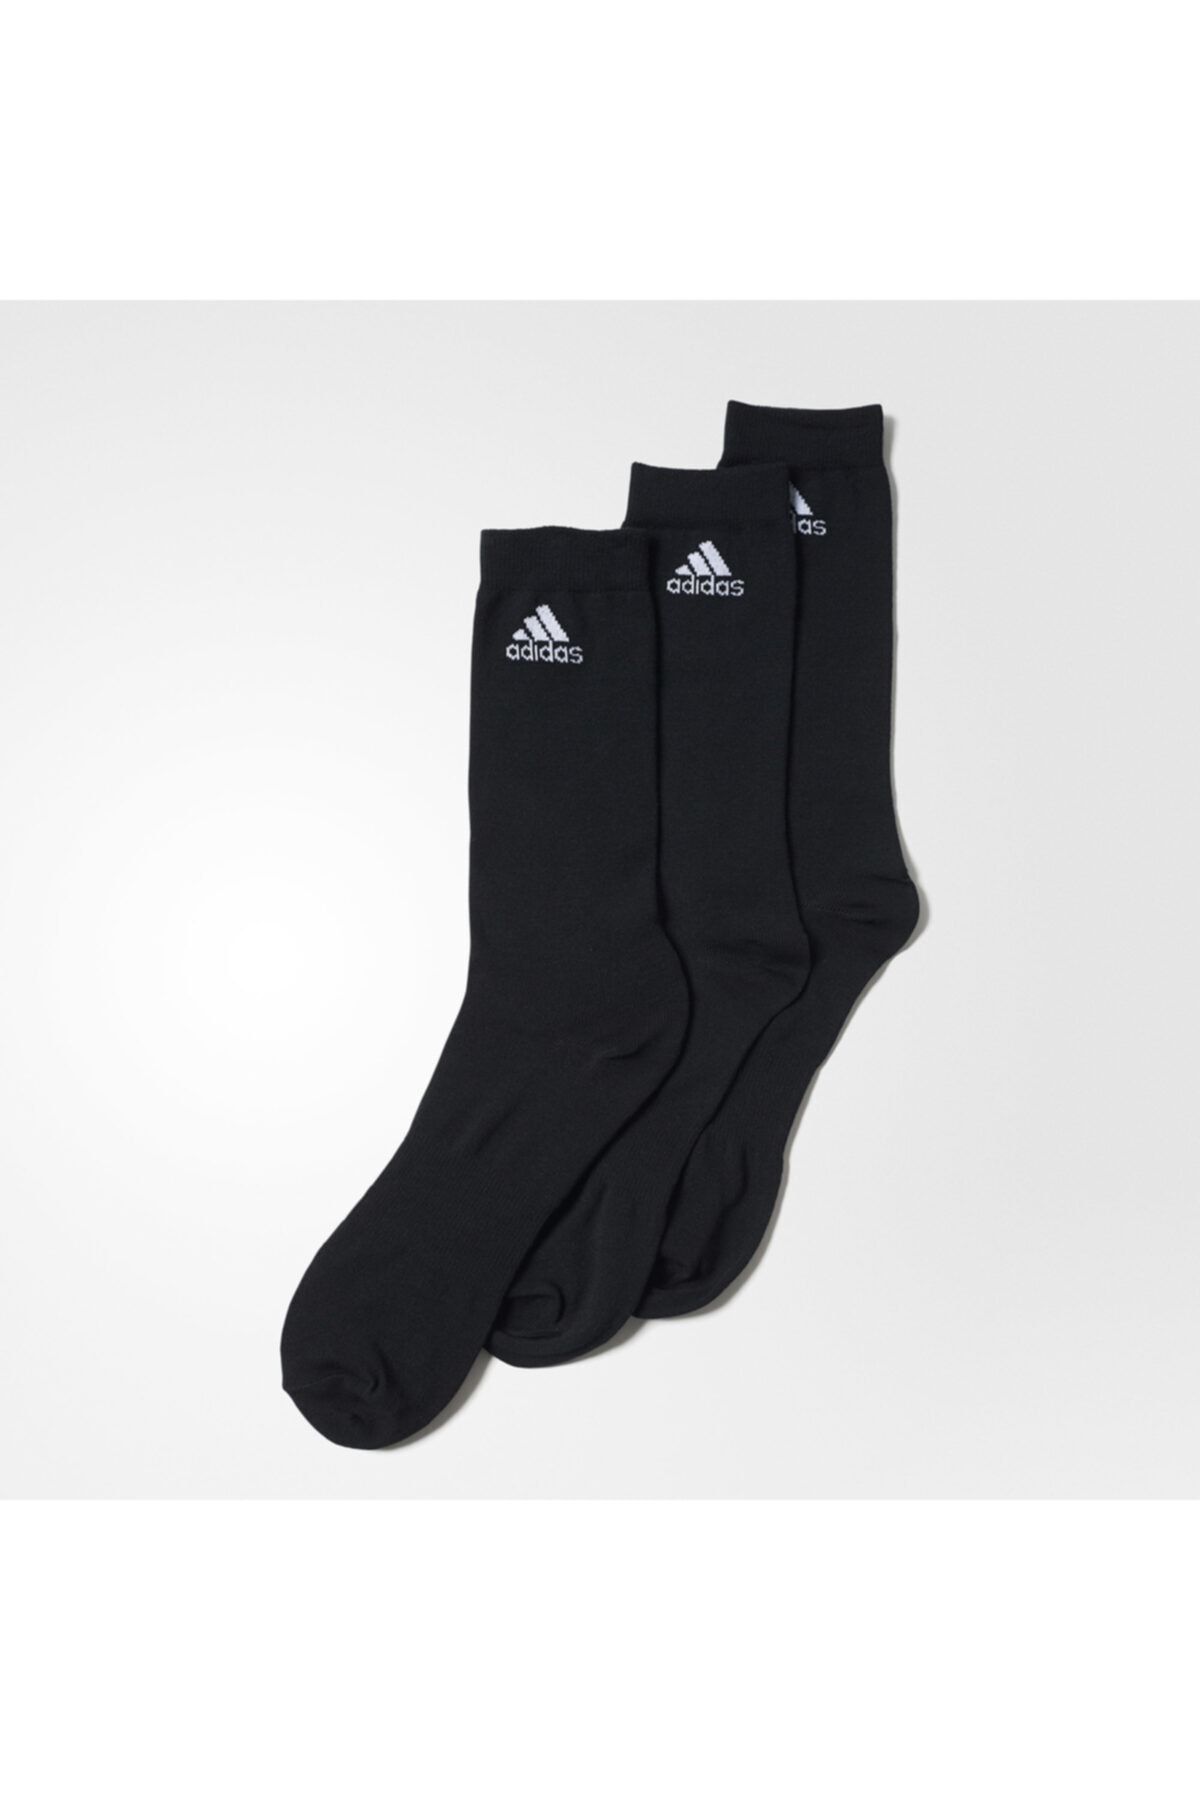 adidas Per Crew T 3pp 3lü Spor Çorabı-aa2330